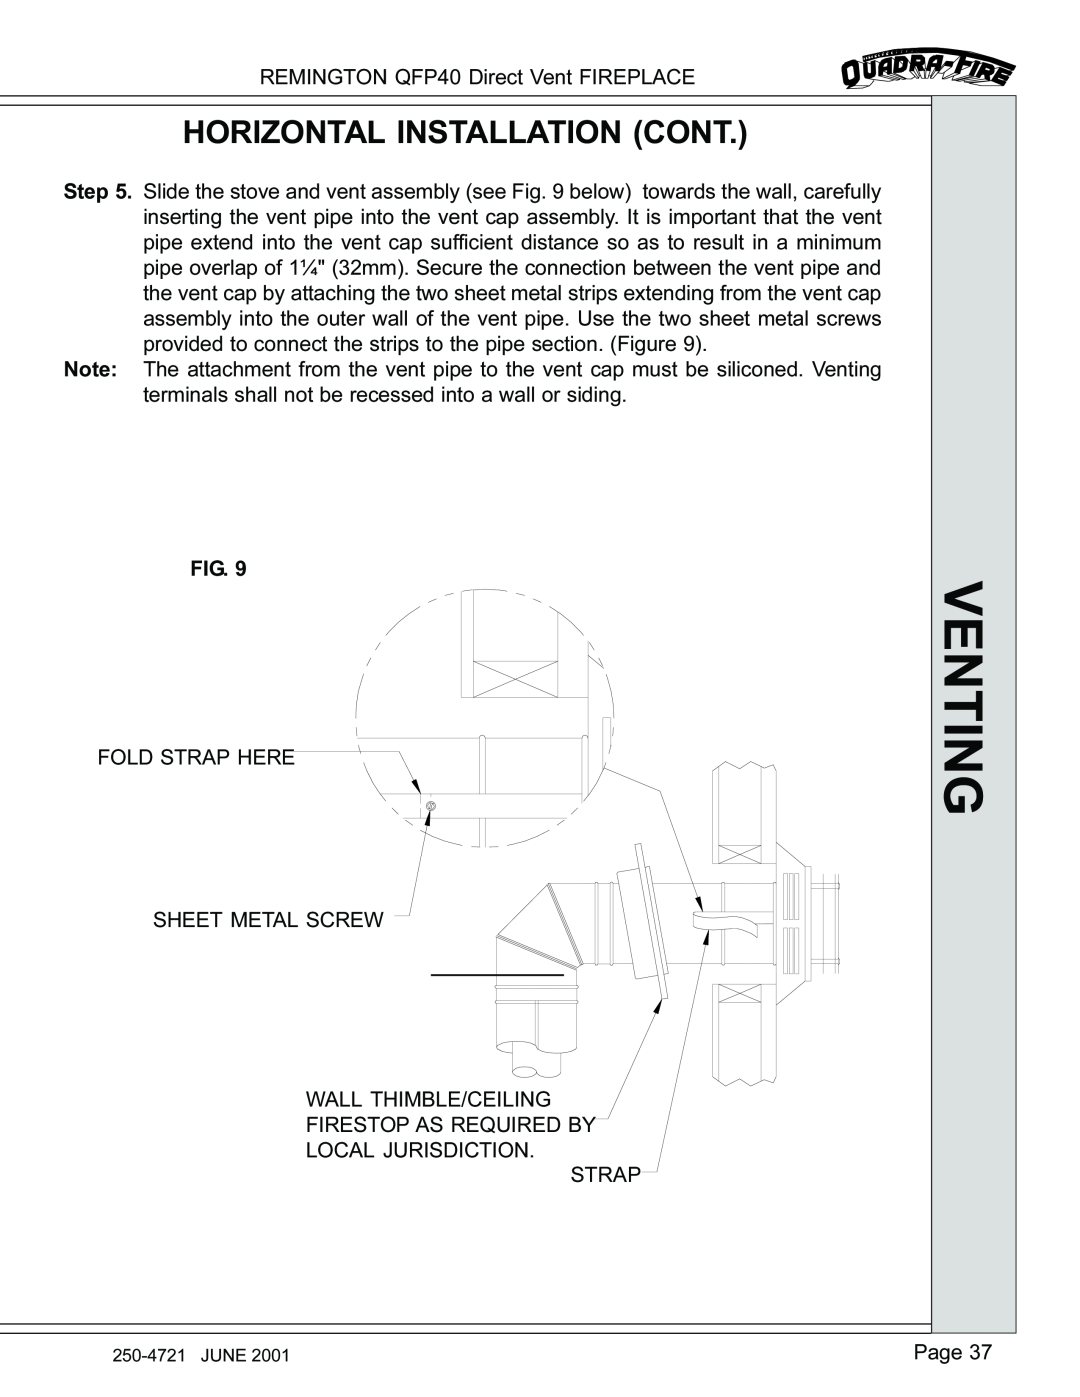 Remington manual Venting, Horizontal Installation Cont, REMINGTON QFP40 Direct Vent FIREPLACE 